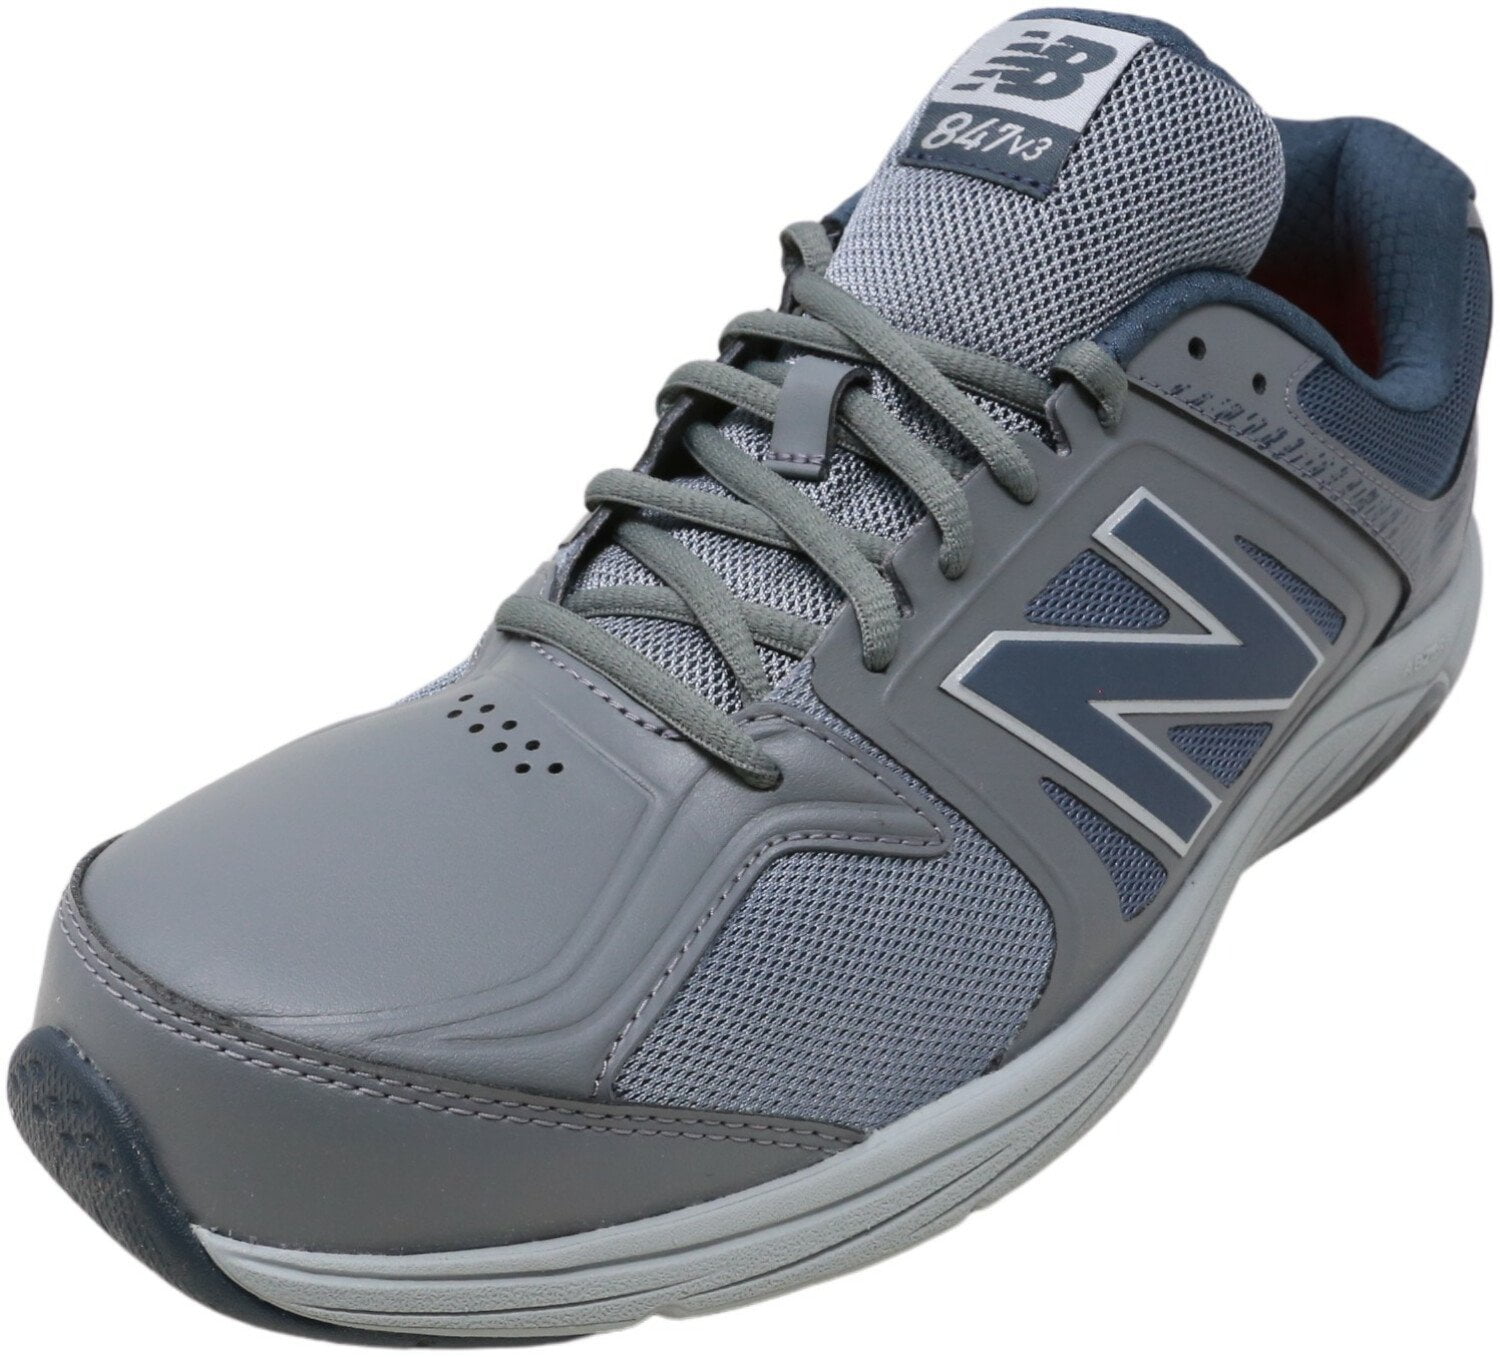 New Balance MW847 Walking Shoe - 7M - Gy3 | Walmart Canada